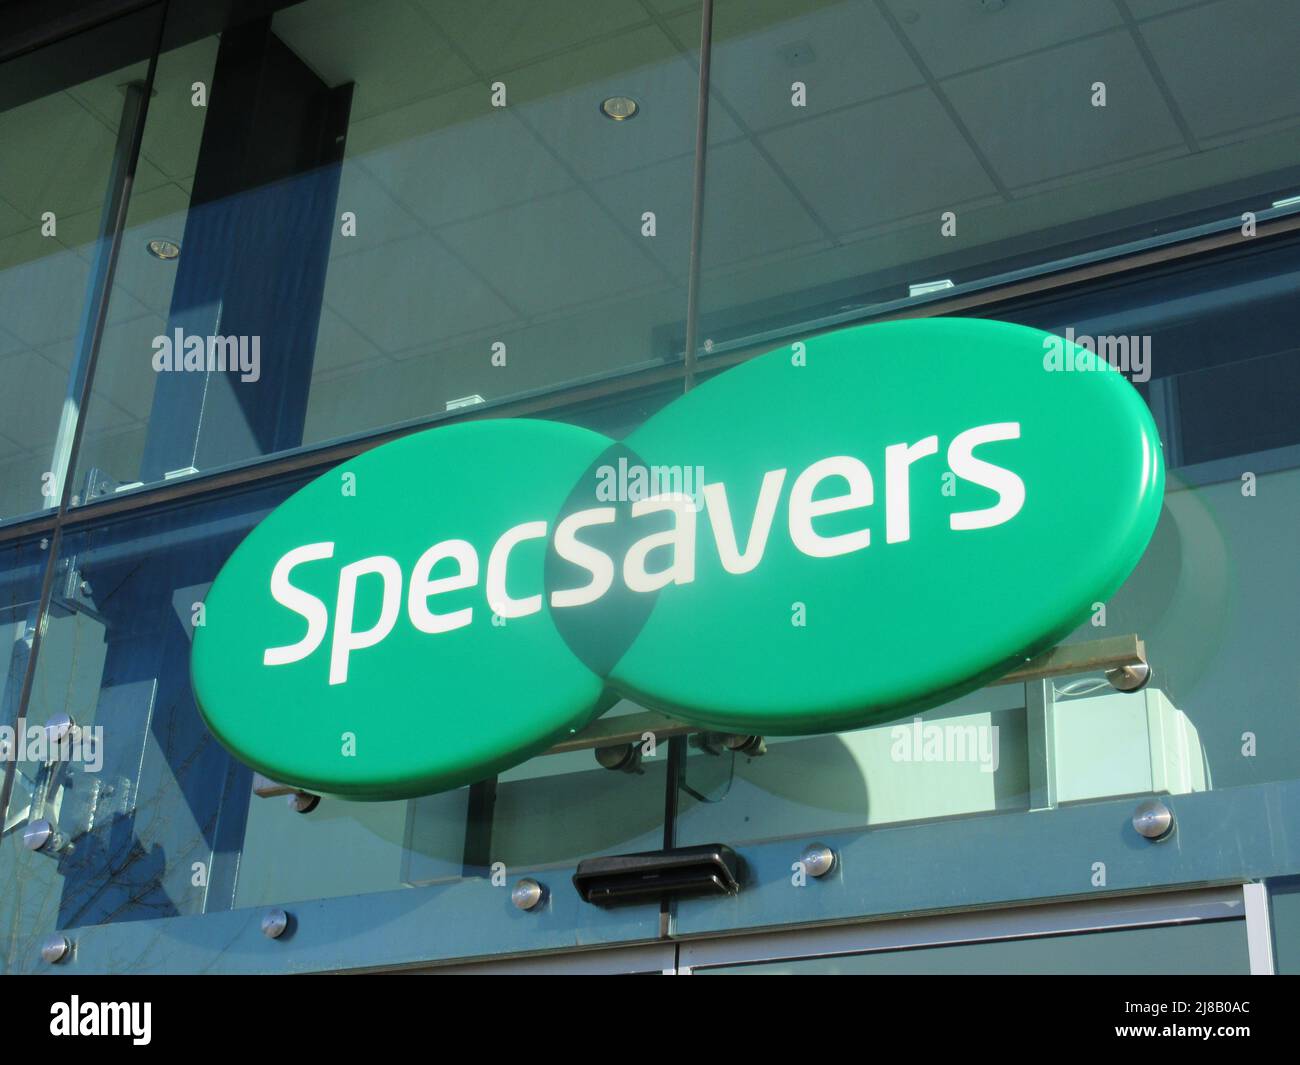 Specsavers Opticians Shop Sign Stock Photo